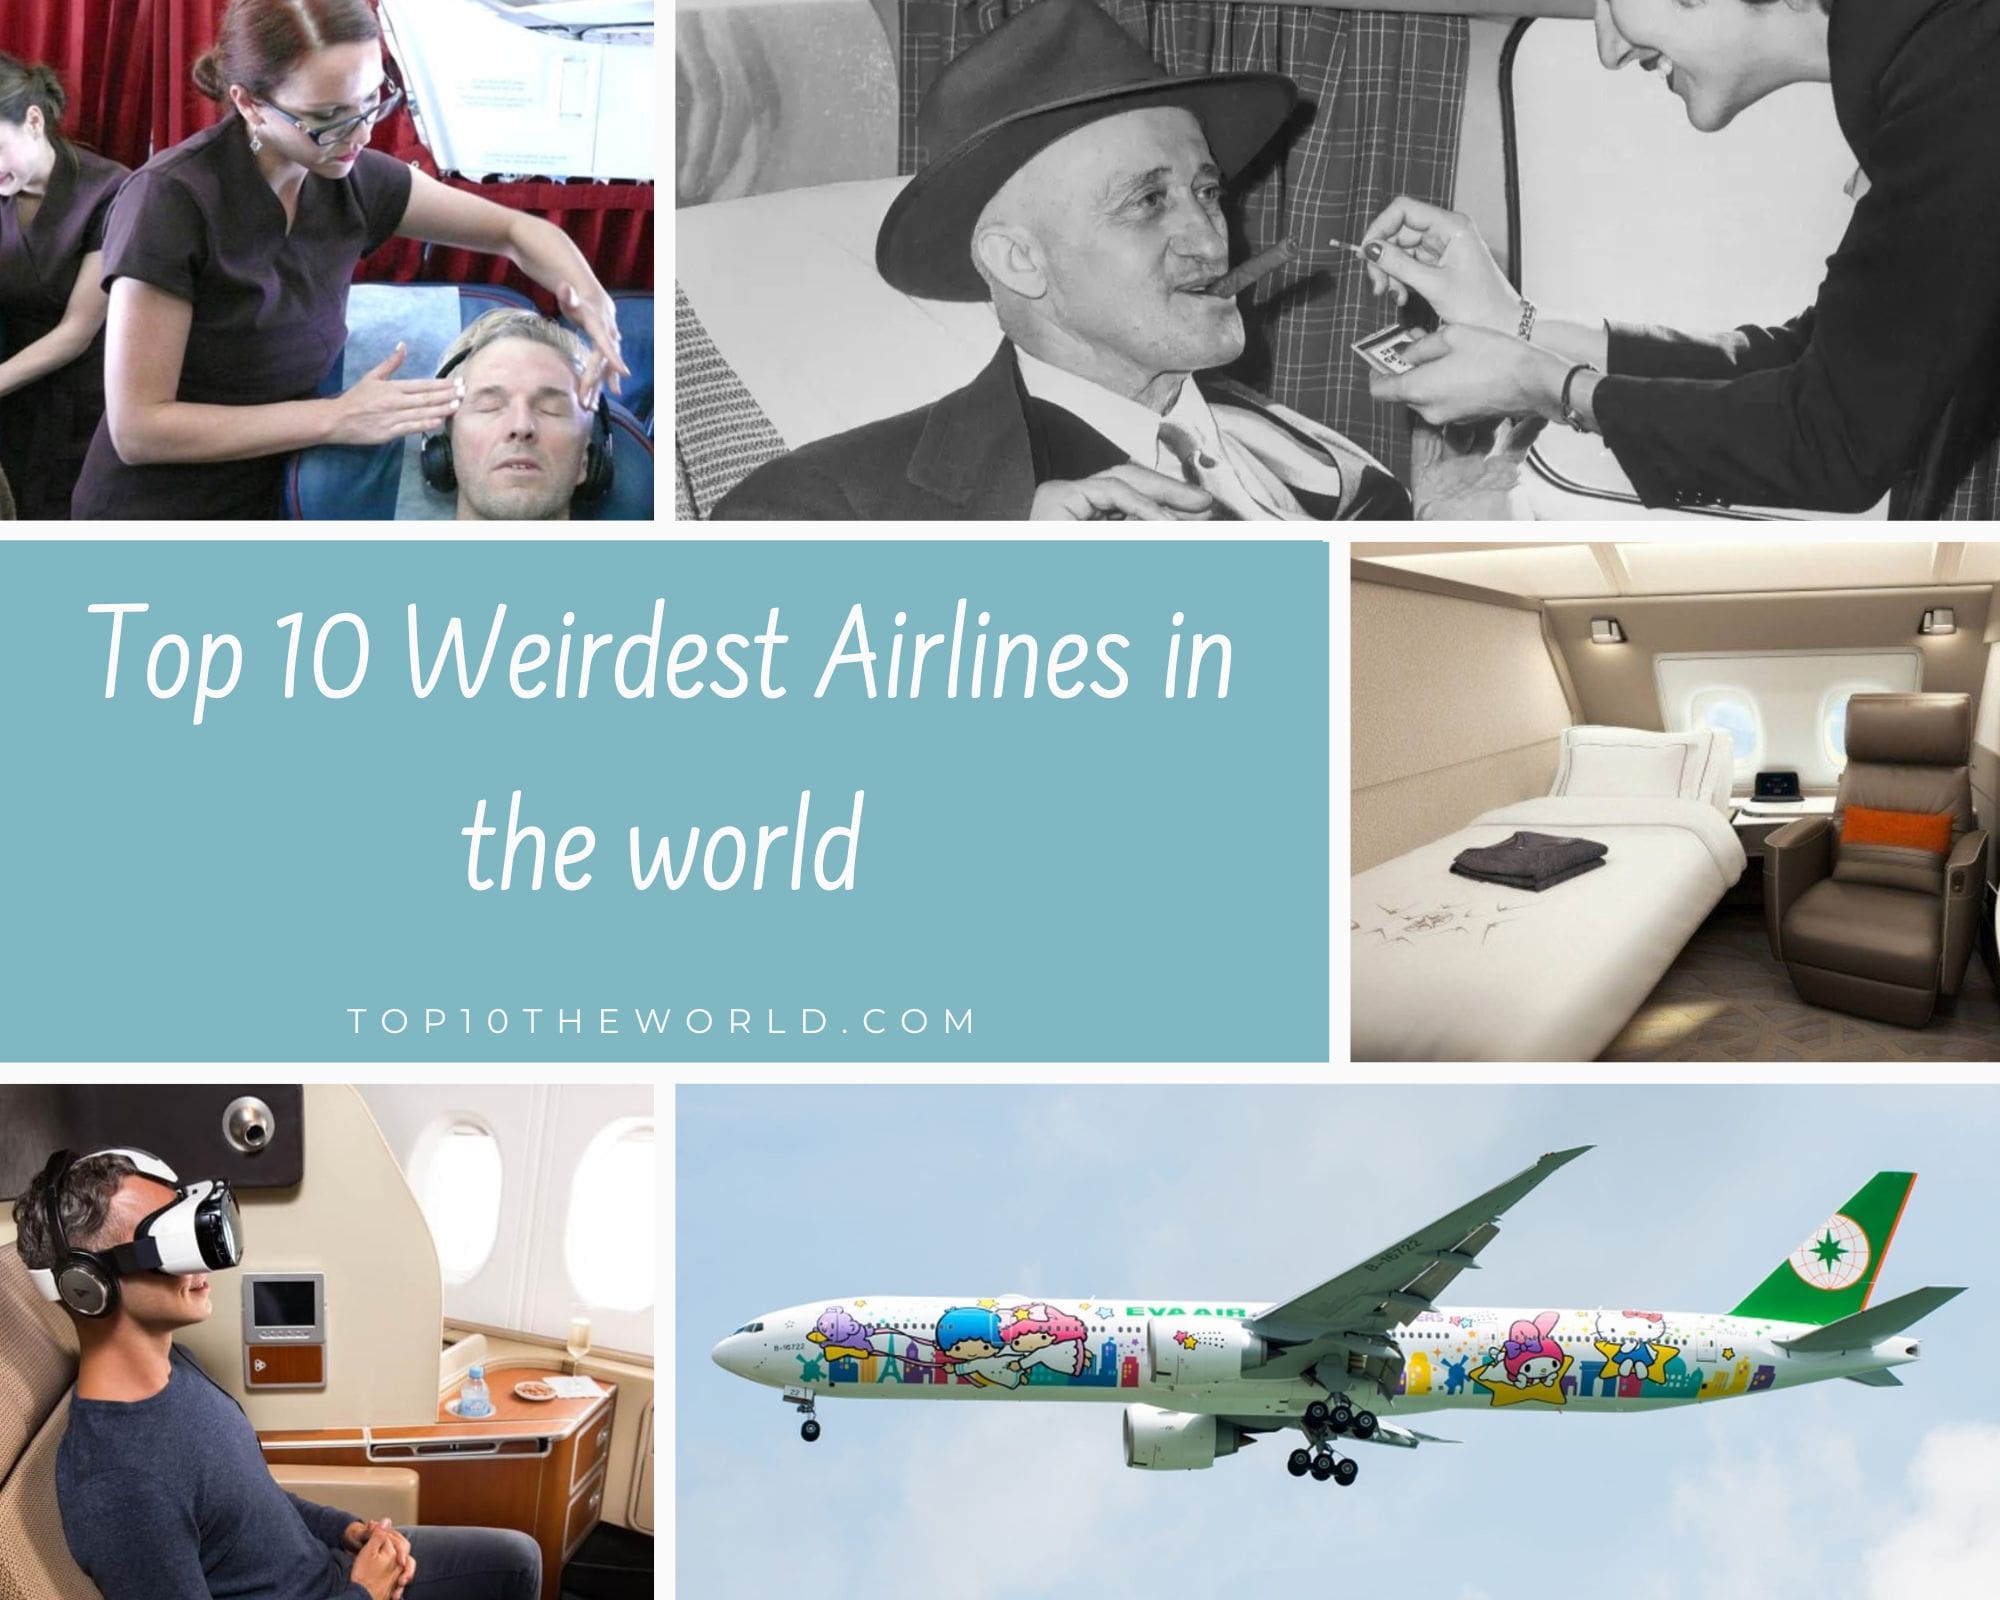 Top 10 Weirdest Airlines in the world